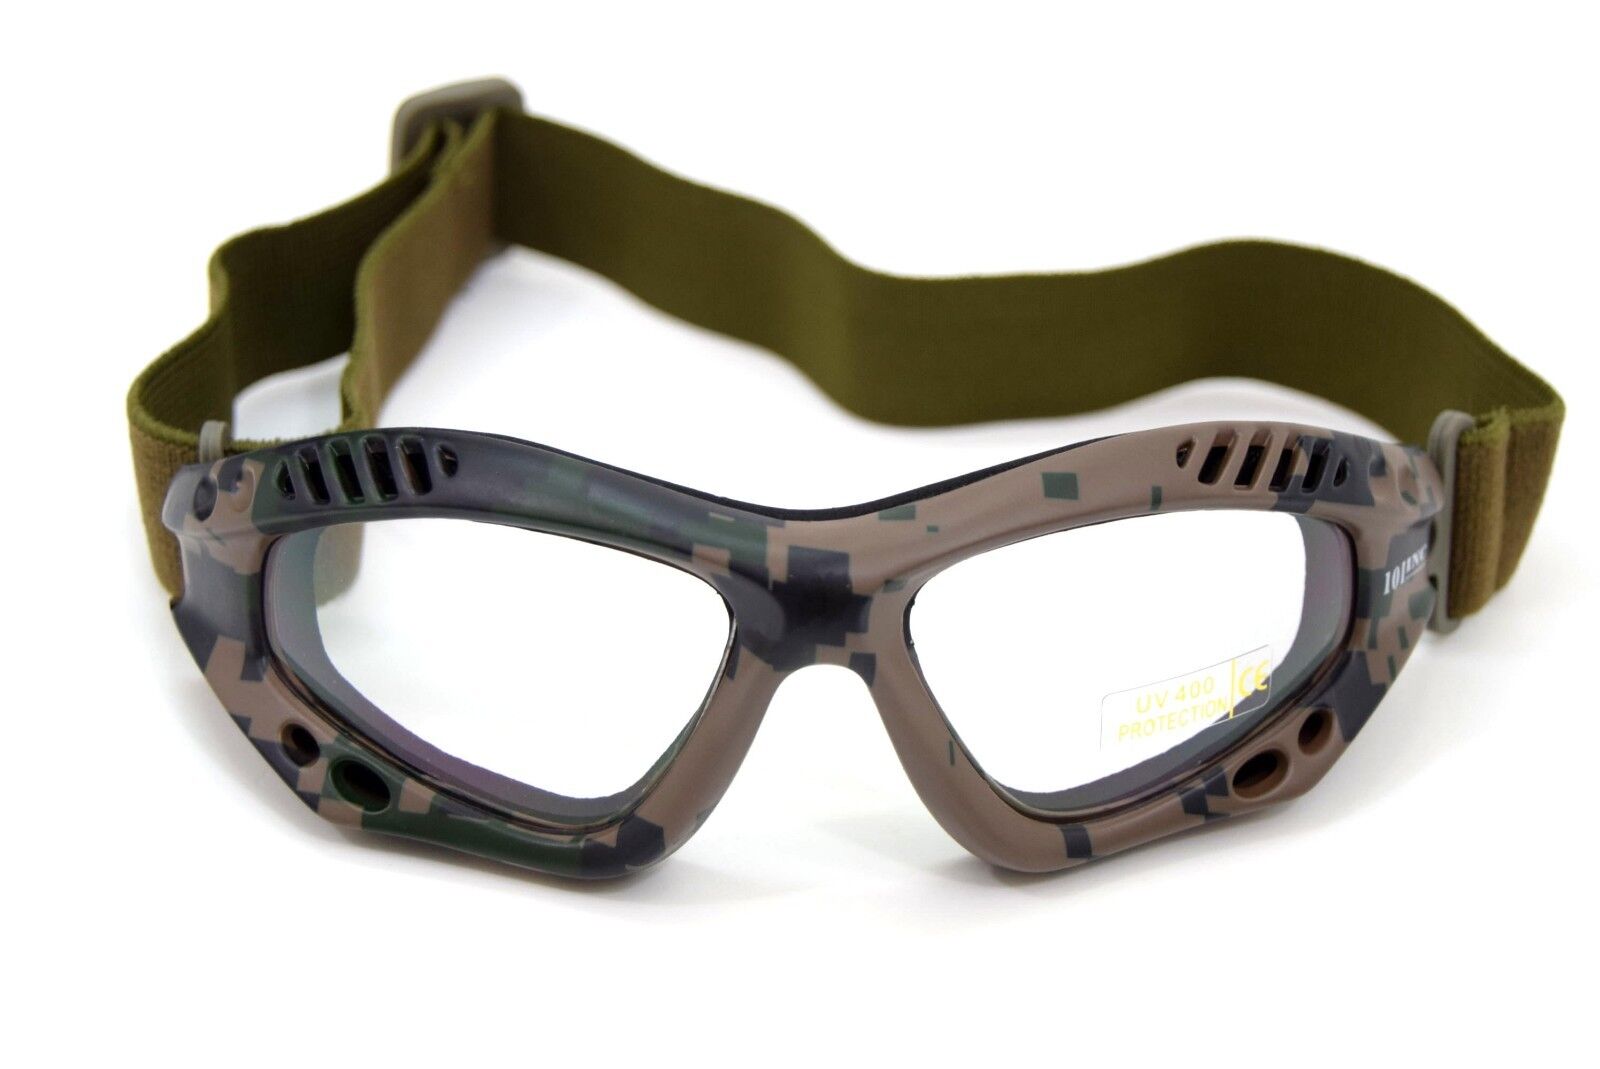 101-INC Military Tactical Goggles Eye Protection Airsoft Marpat US Woodland Digi